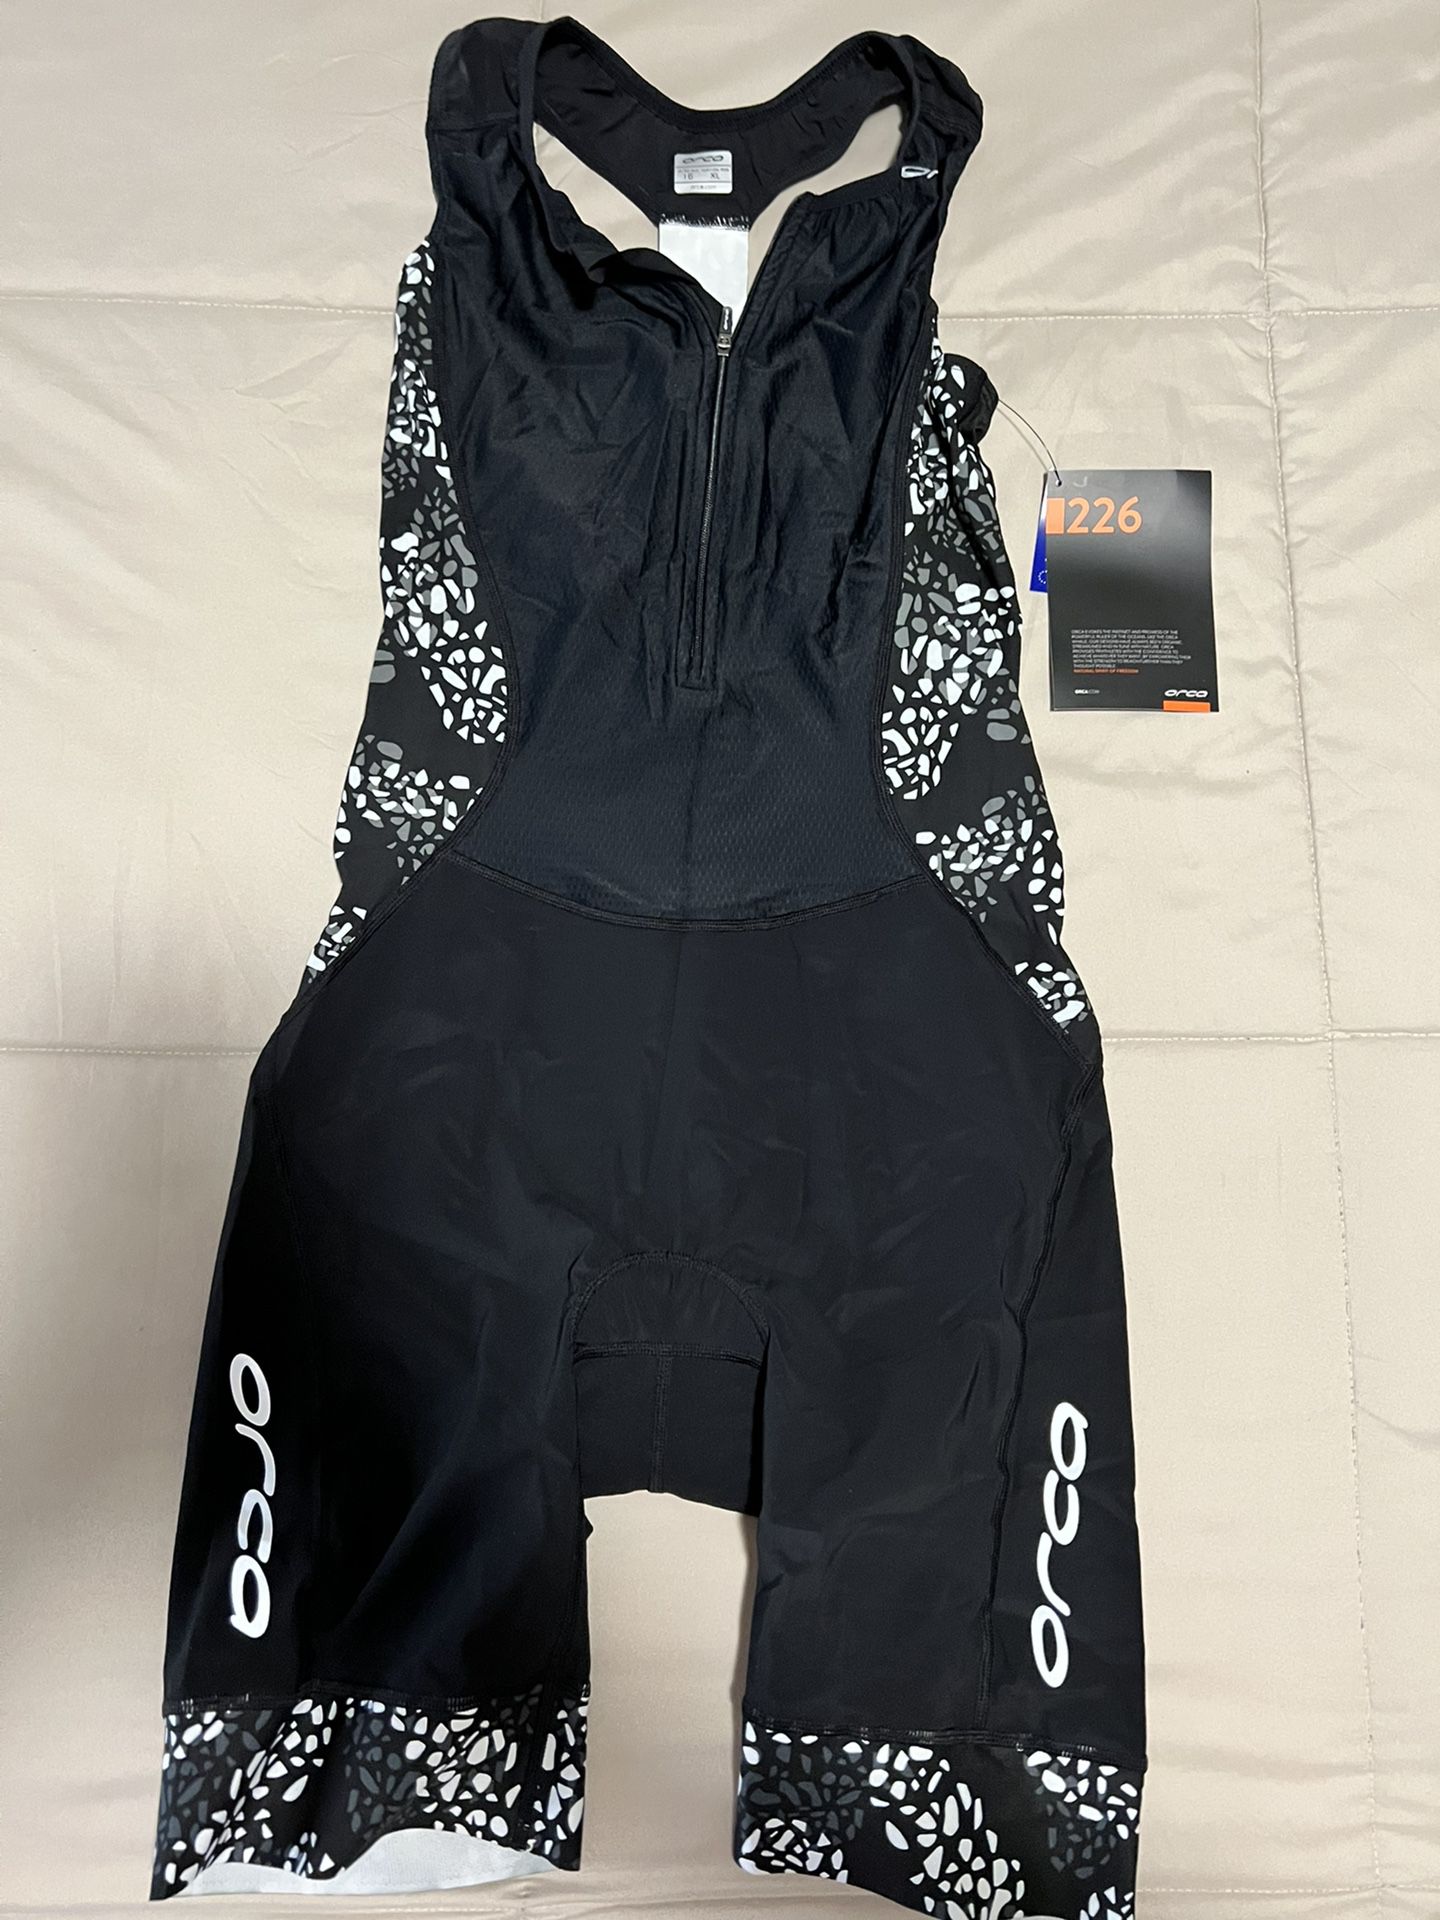 Womens Orca Comp Race Suit XL/16 -brand New